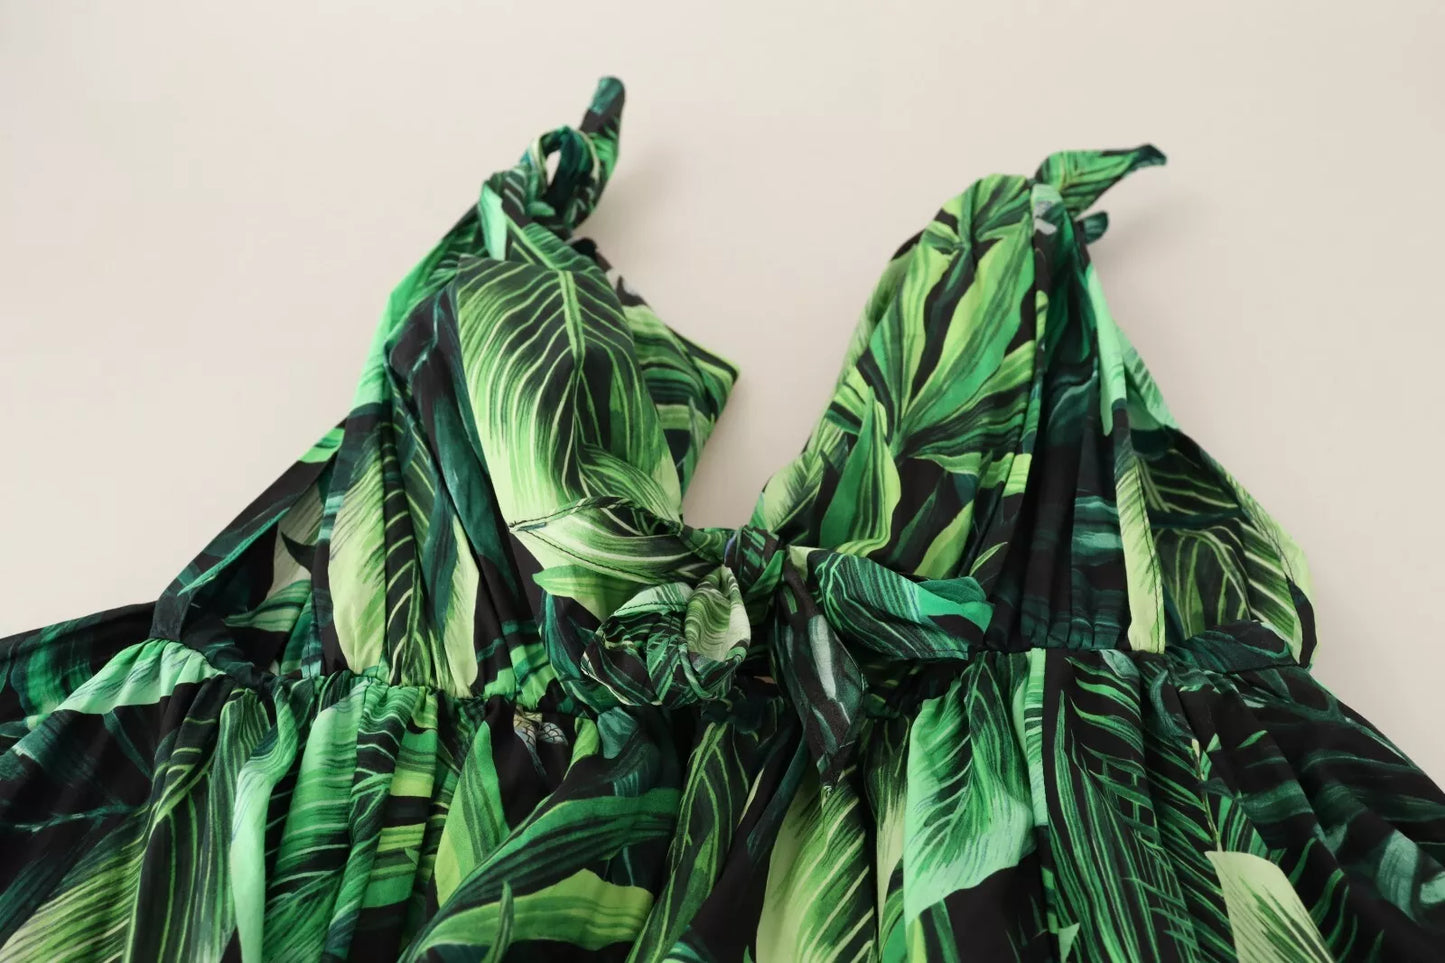 Dolce & Gabbana Green Leaves Print Cotton Flared Mini Dress